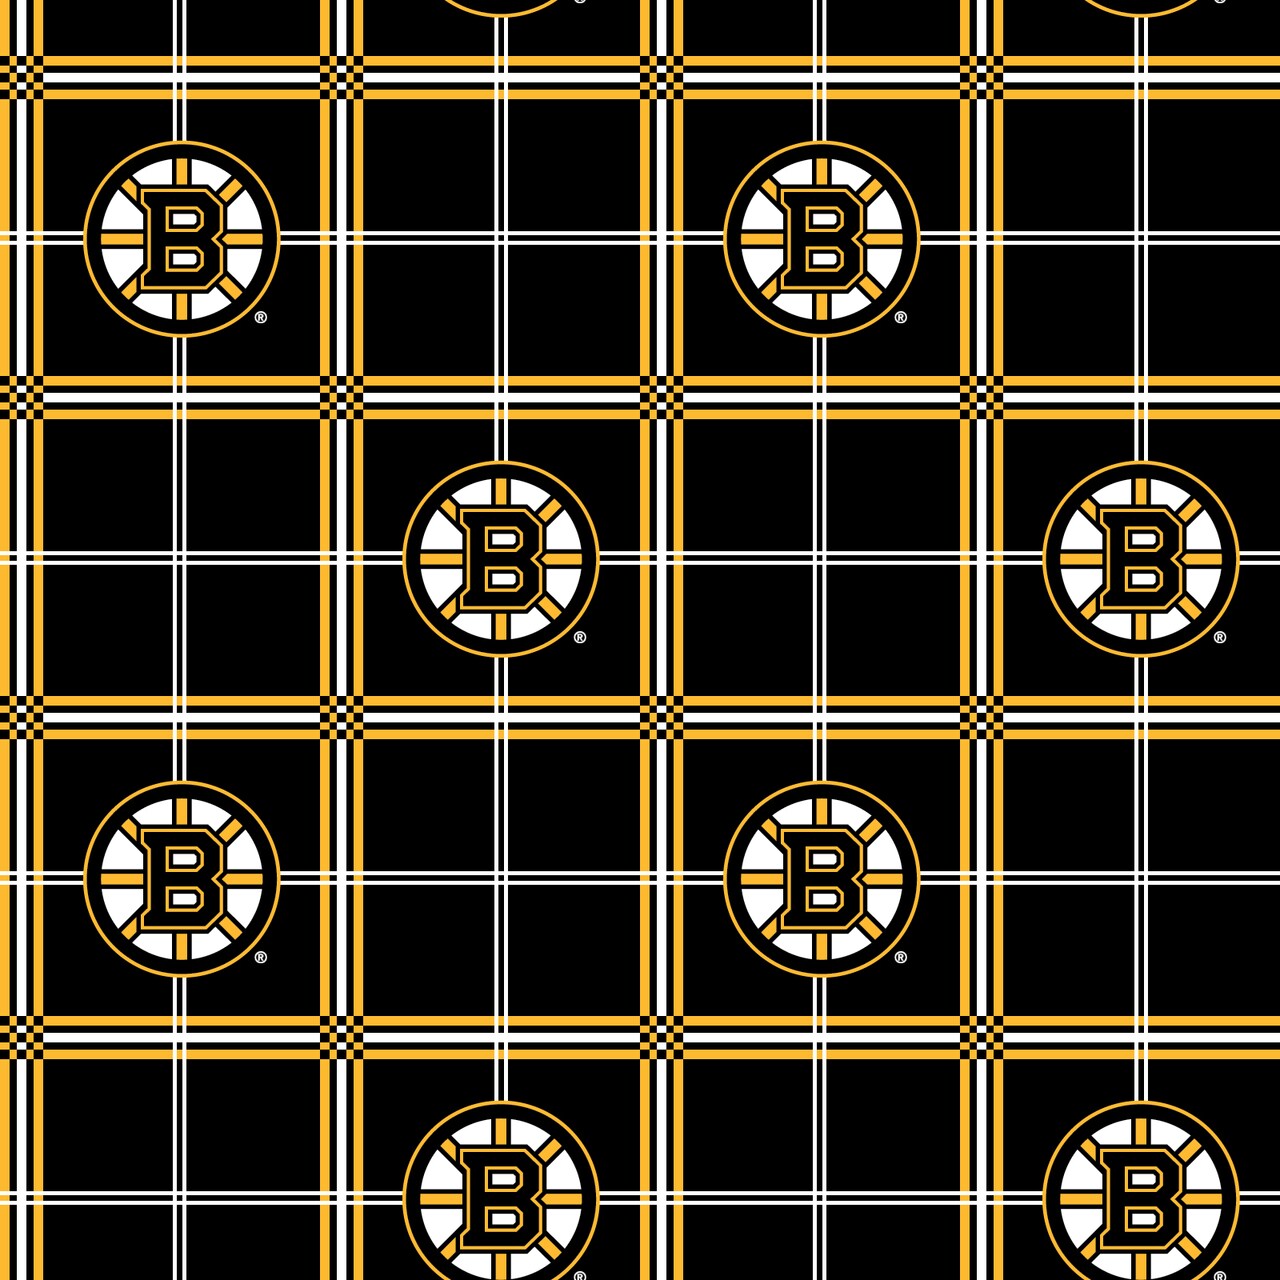 Sykel Enterprises NHL Team Cotton Flannel Fabric-Boston Bruins Plaid Flannel Fabric